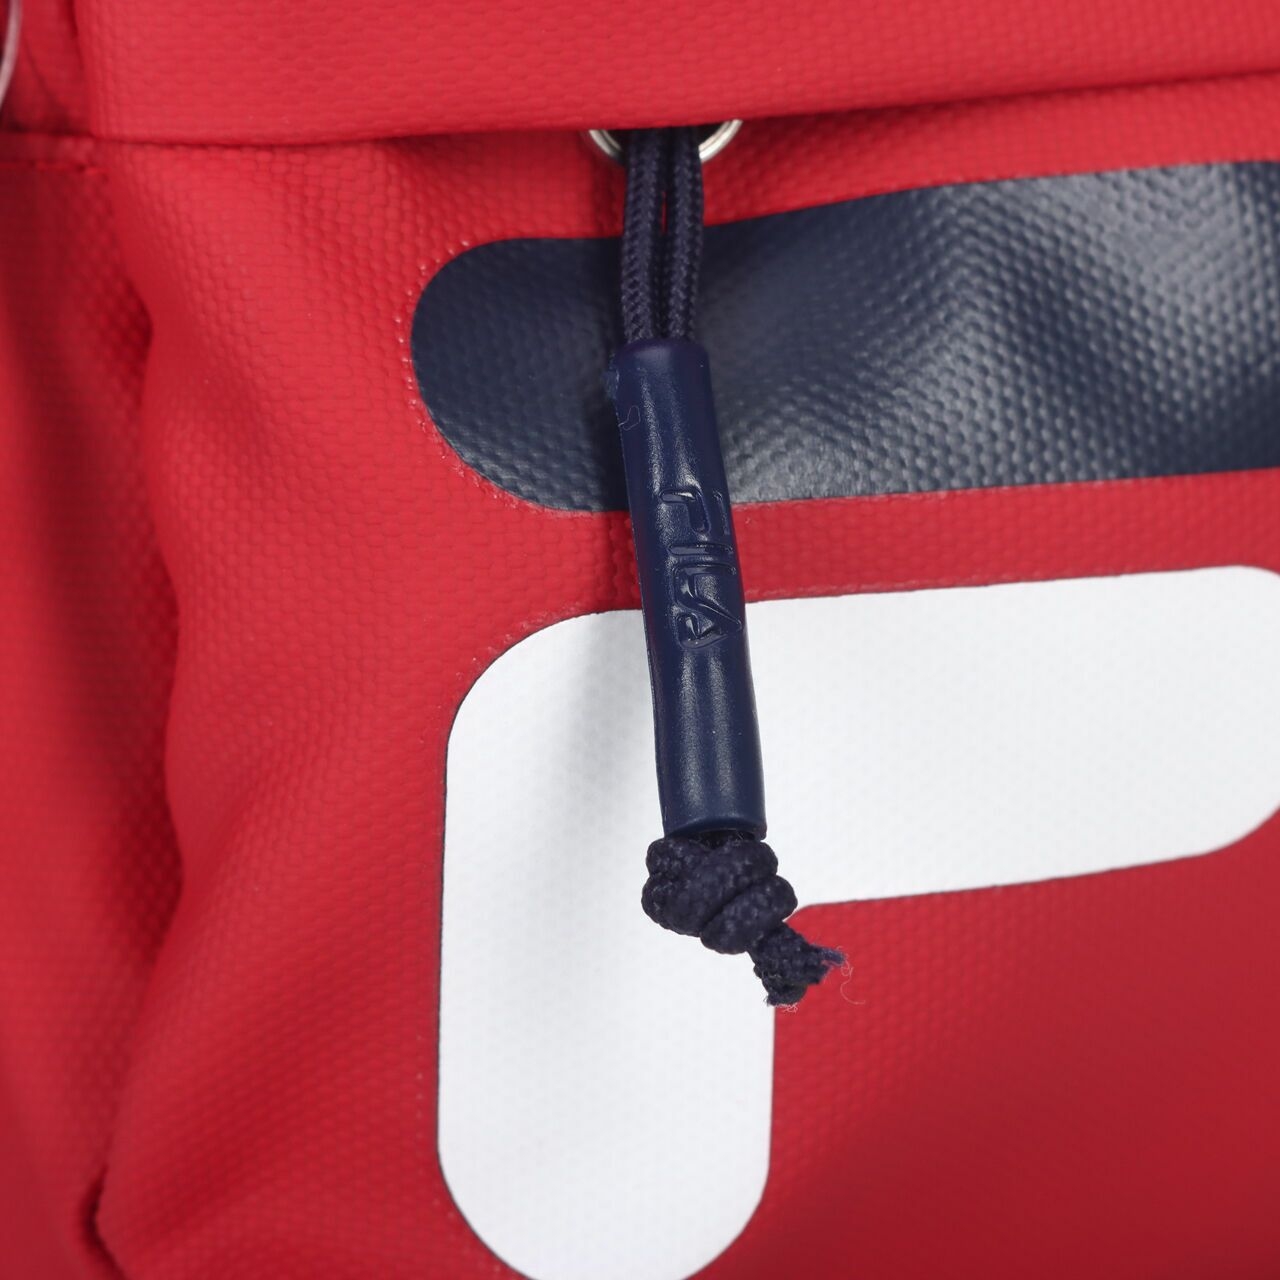 FILA Navy & Red Waist Bag